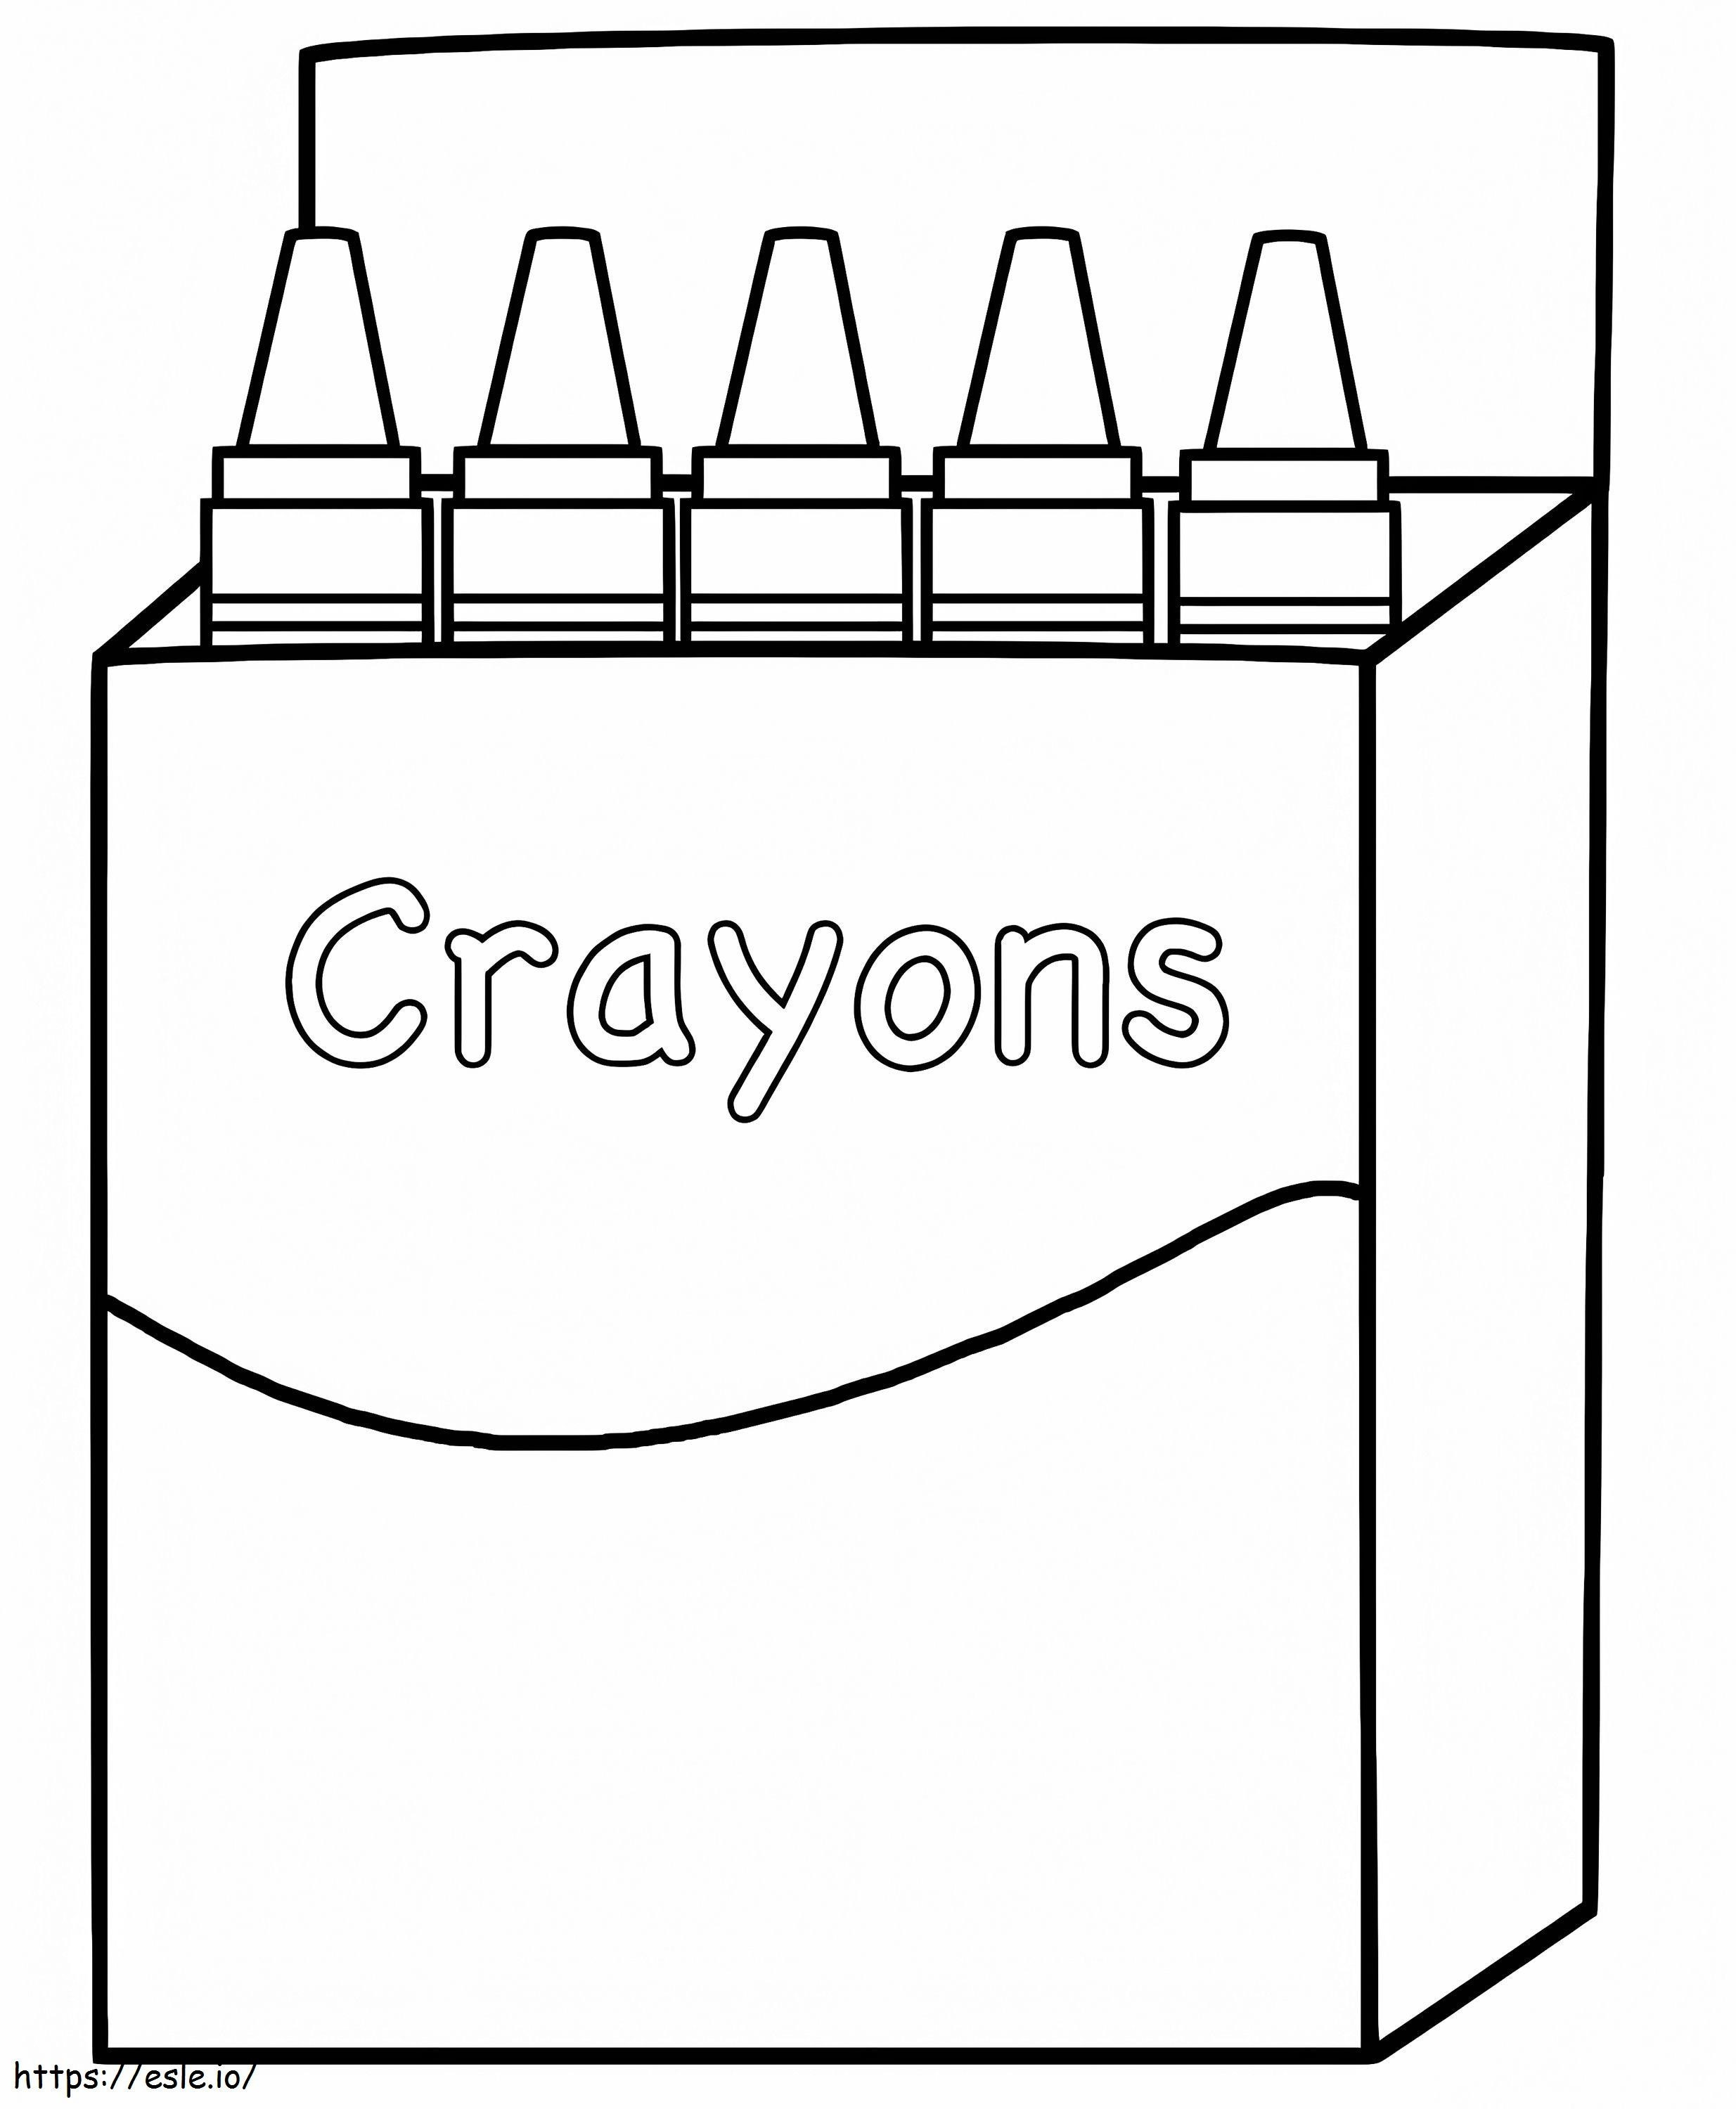 A Crayon Box coloring page